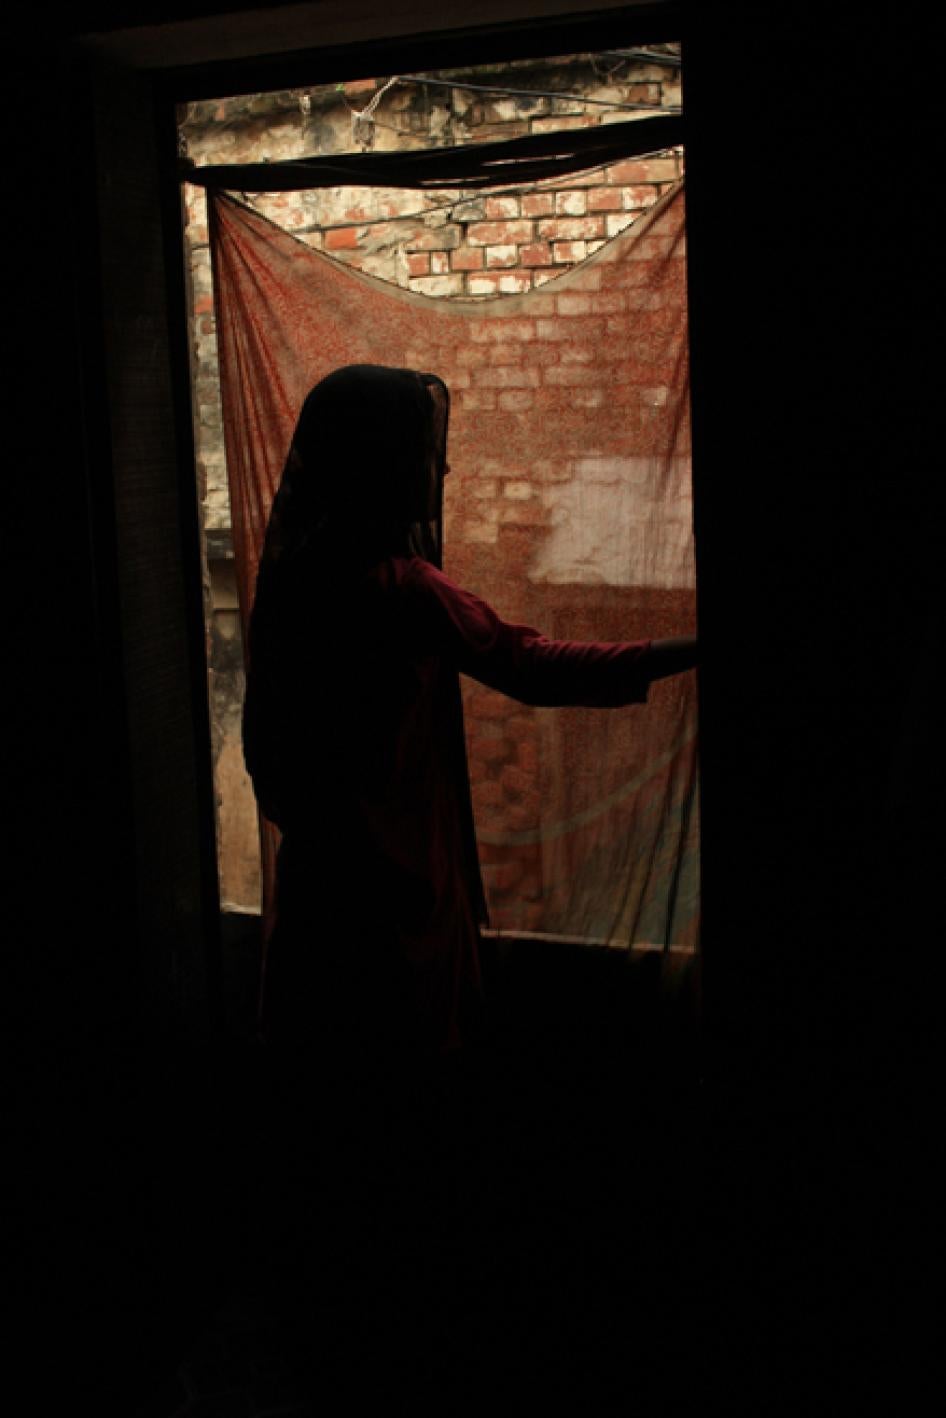 South Asia Failing to Address Its Child Rape Problem Human Rights Watch photo